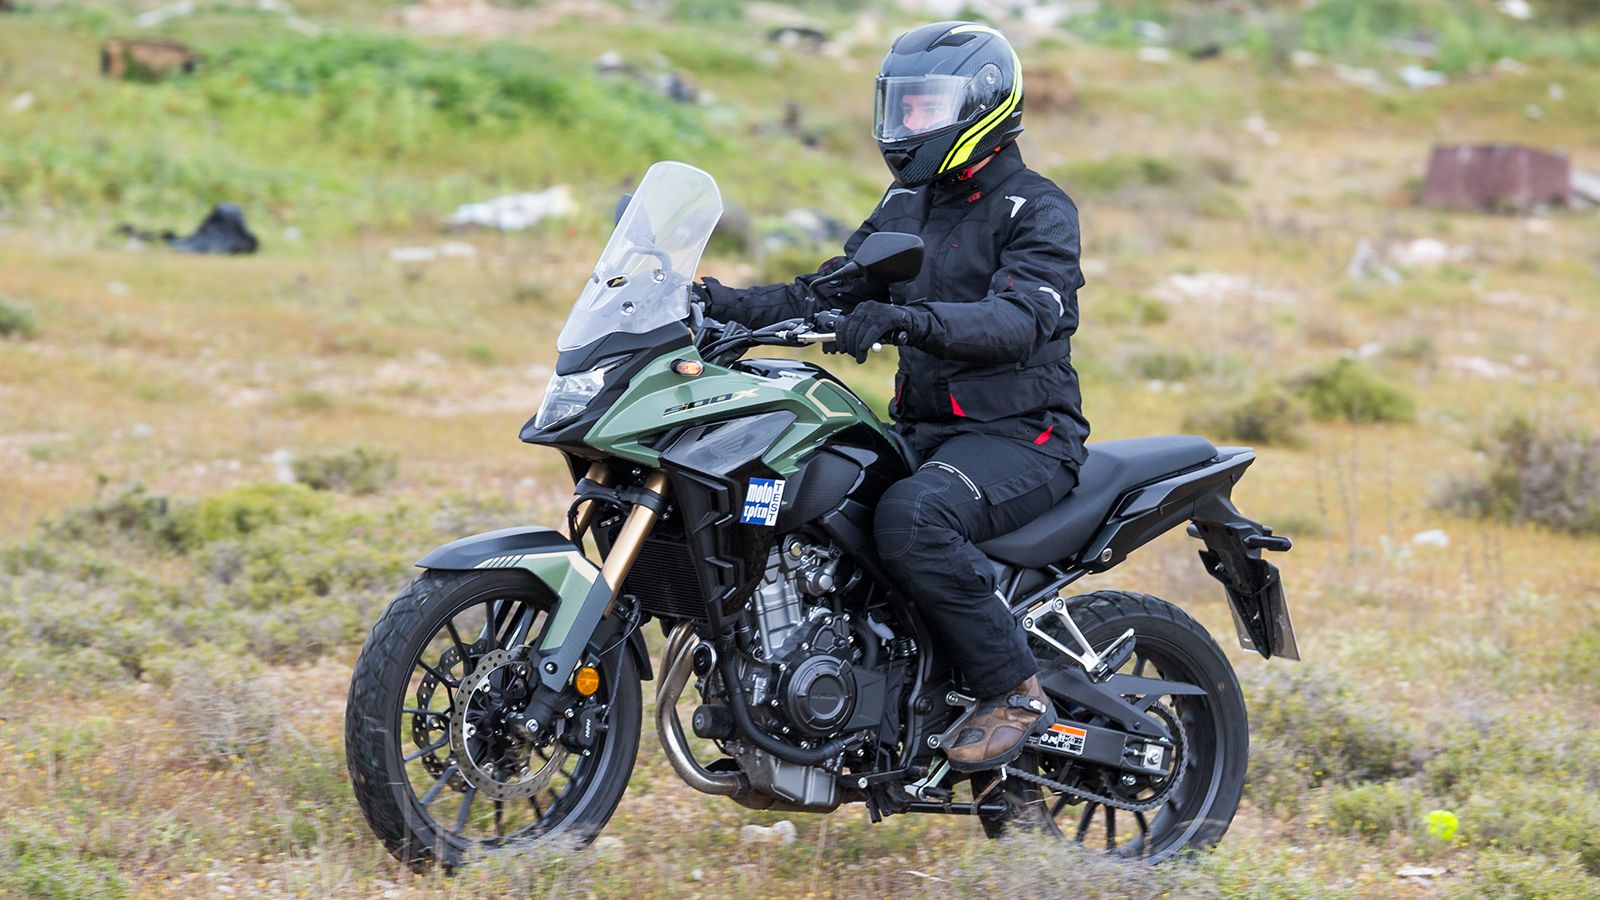 Honda CB 500 X ABS - Moto Hobby